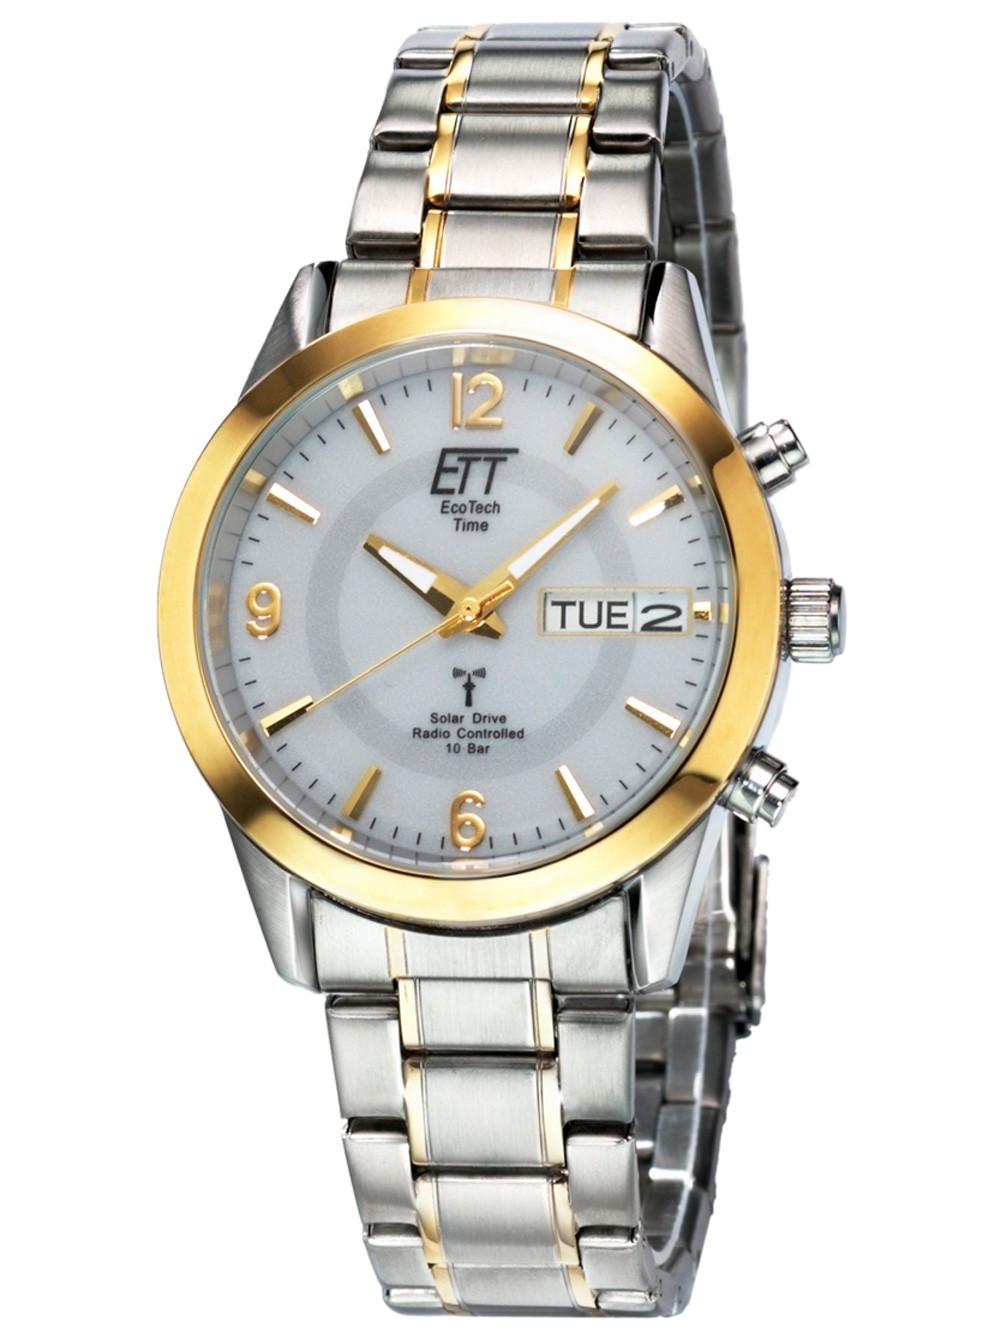 Watches | Chrono12 Solar 10ATM EGS-11253-12M ETT Funk Gobi 40mm Herren - Drive